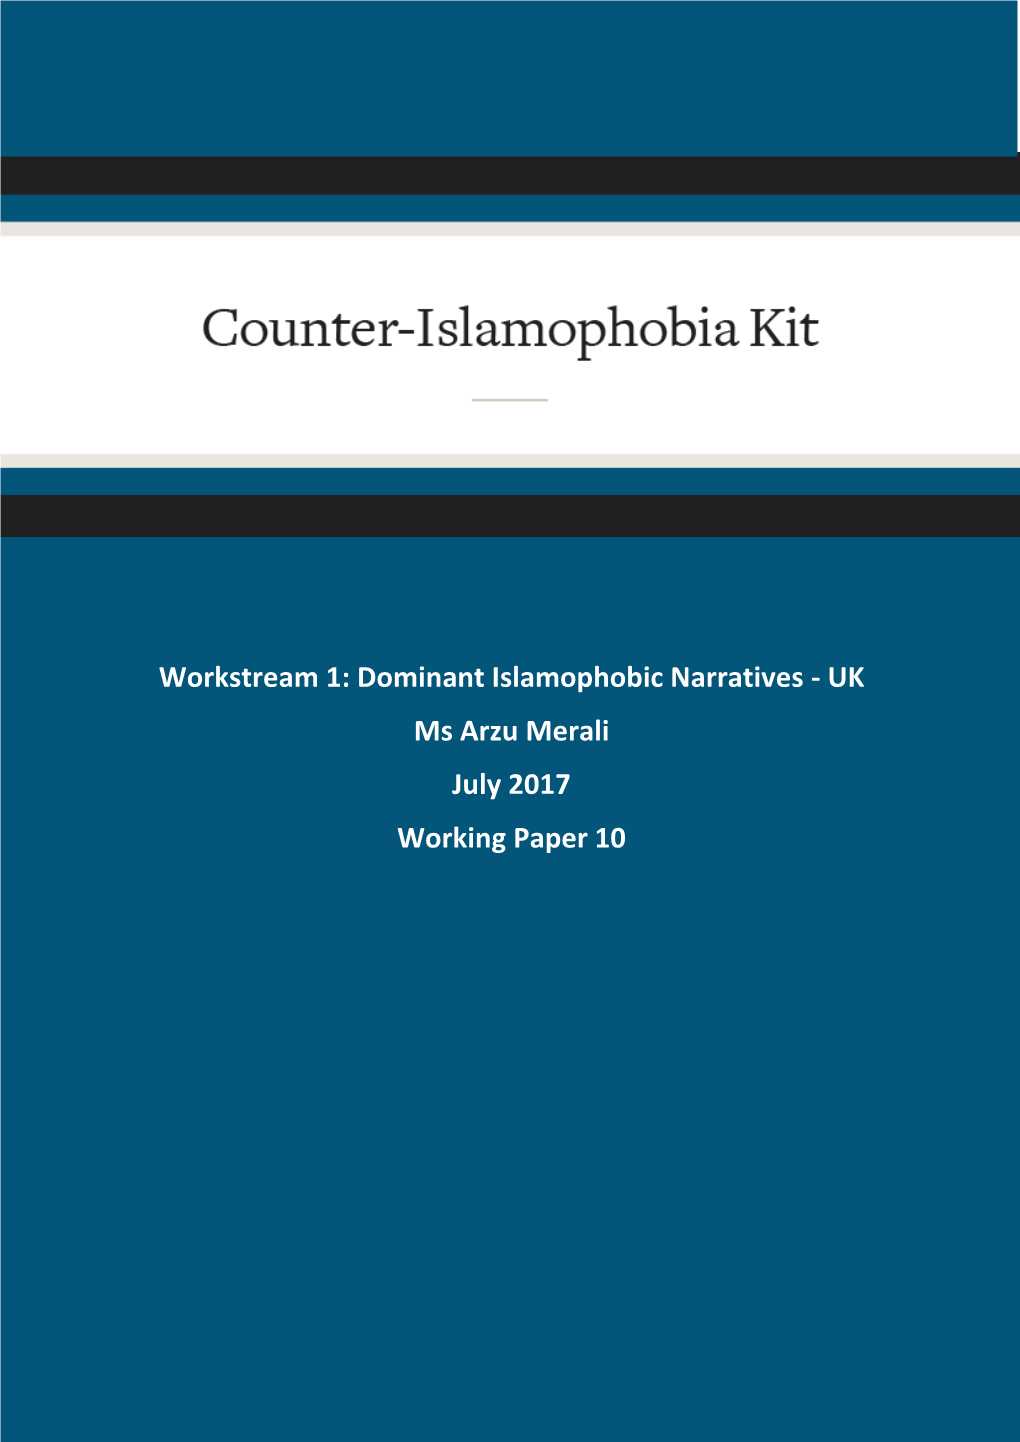 Workstream 1: Dominant Islamophobic Narratives – UK Ms Arzu Merali Working Paper 10